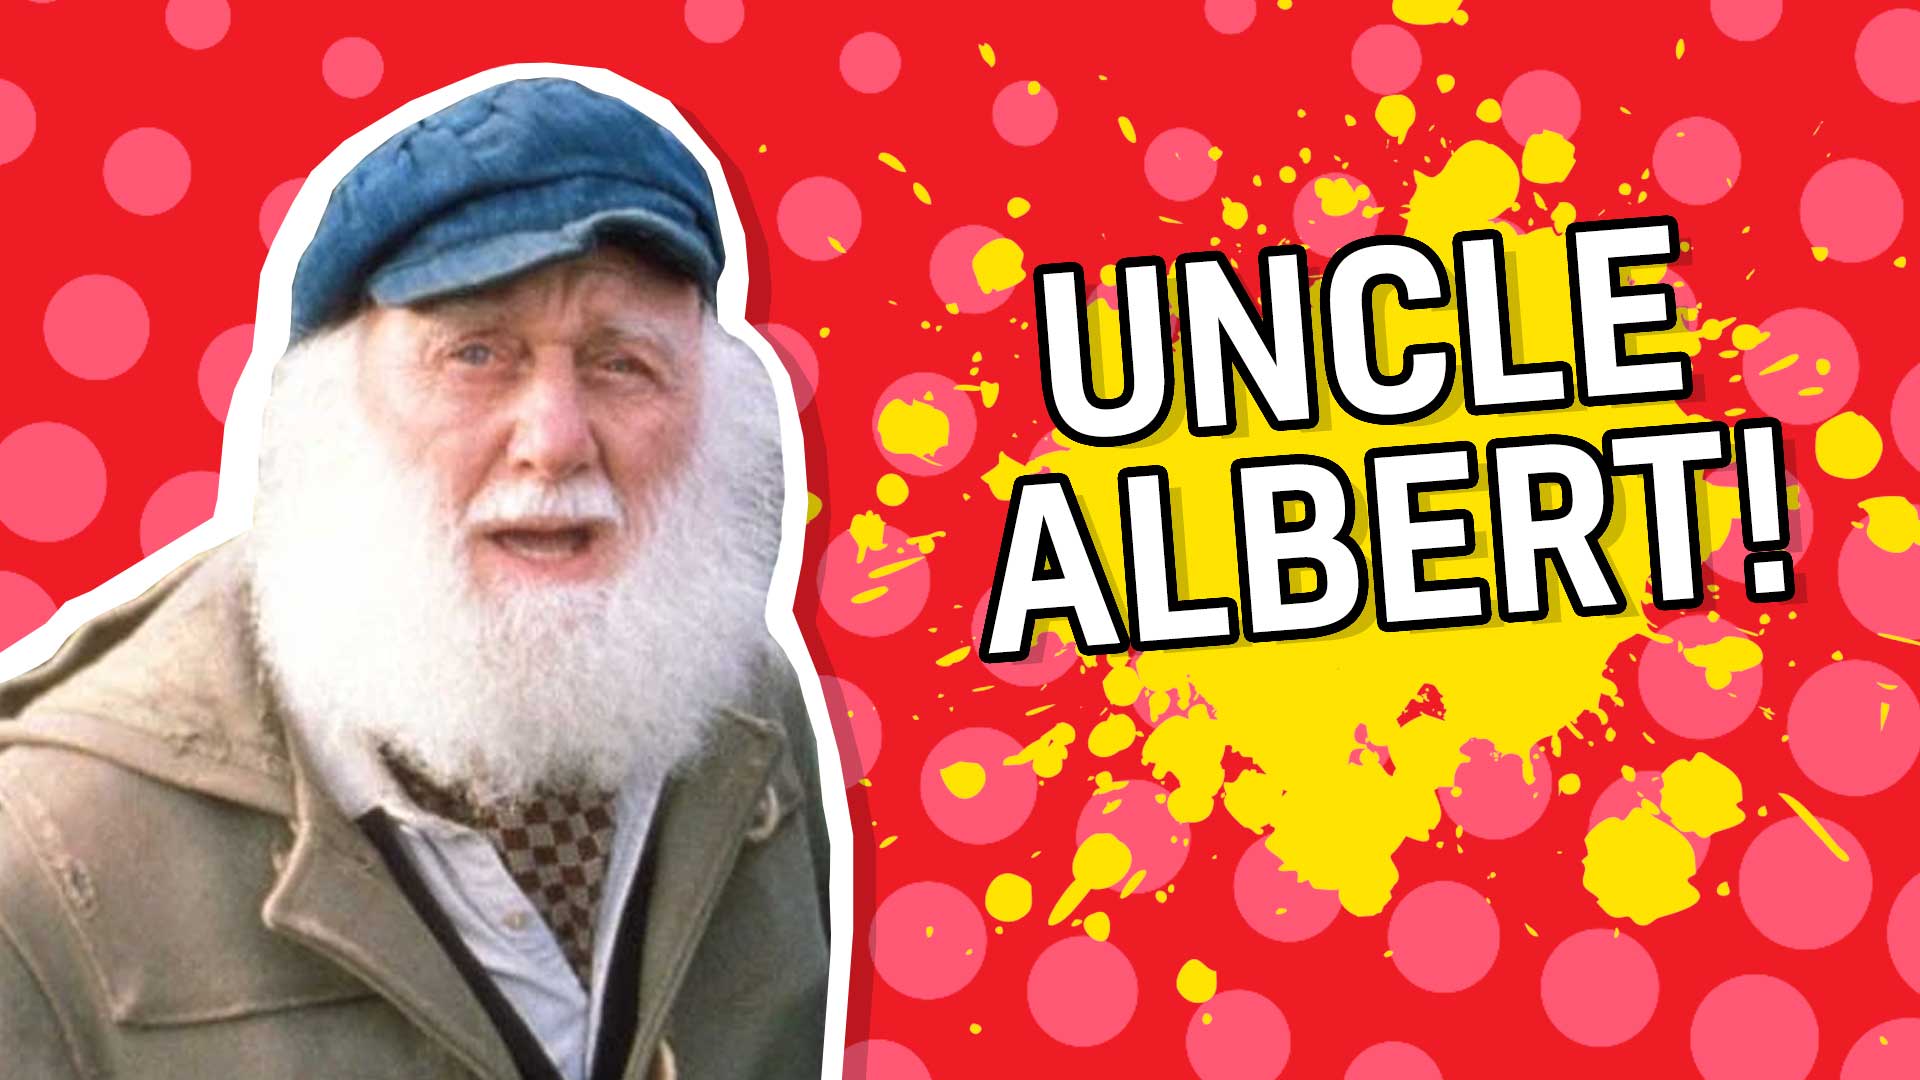 Result: Uncle Albert